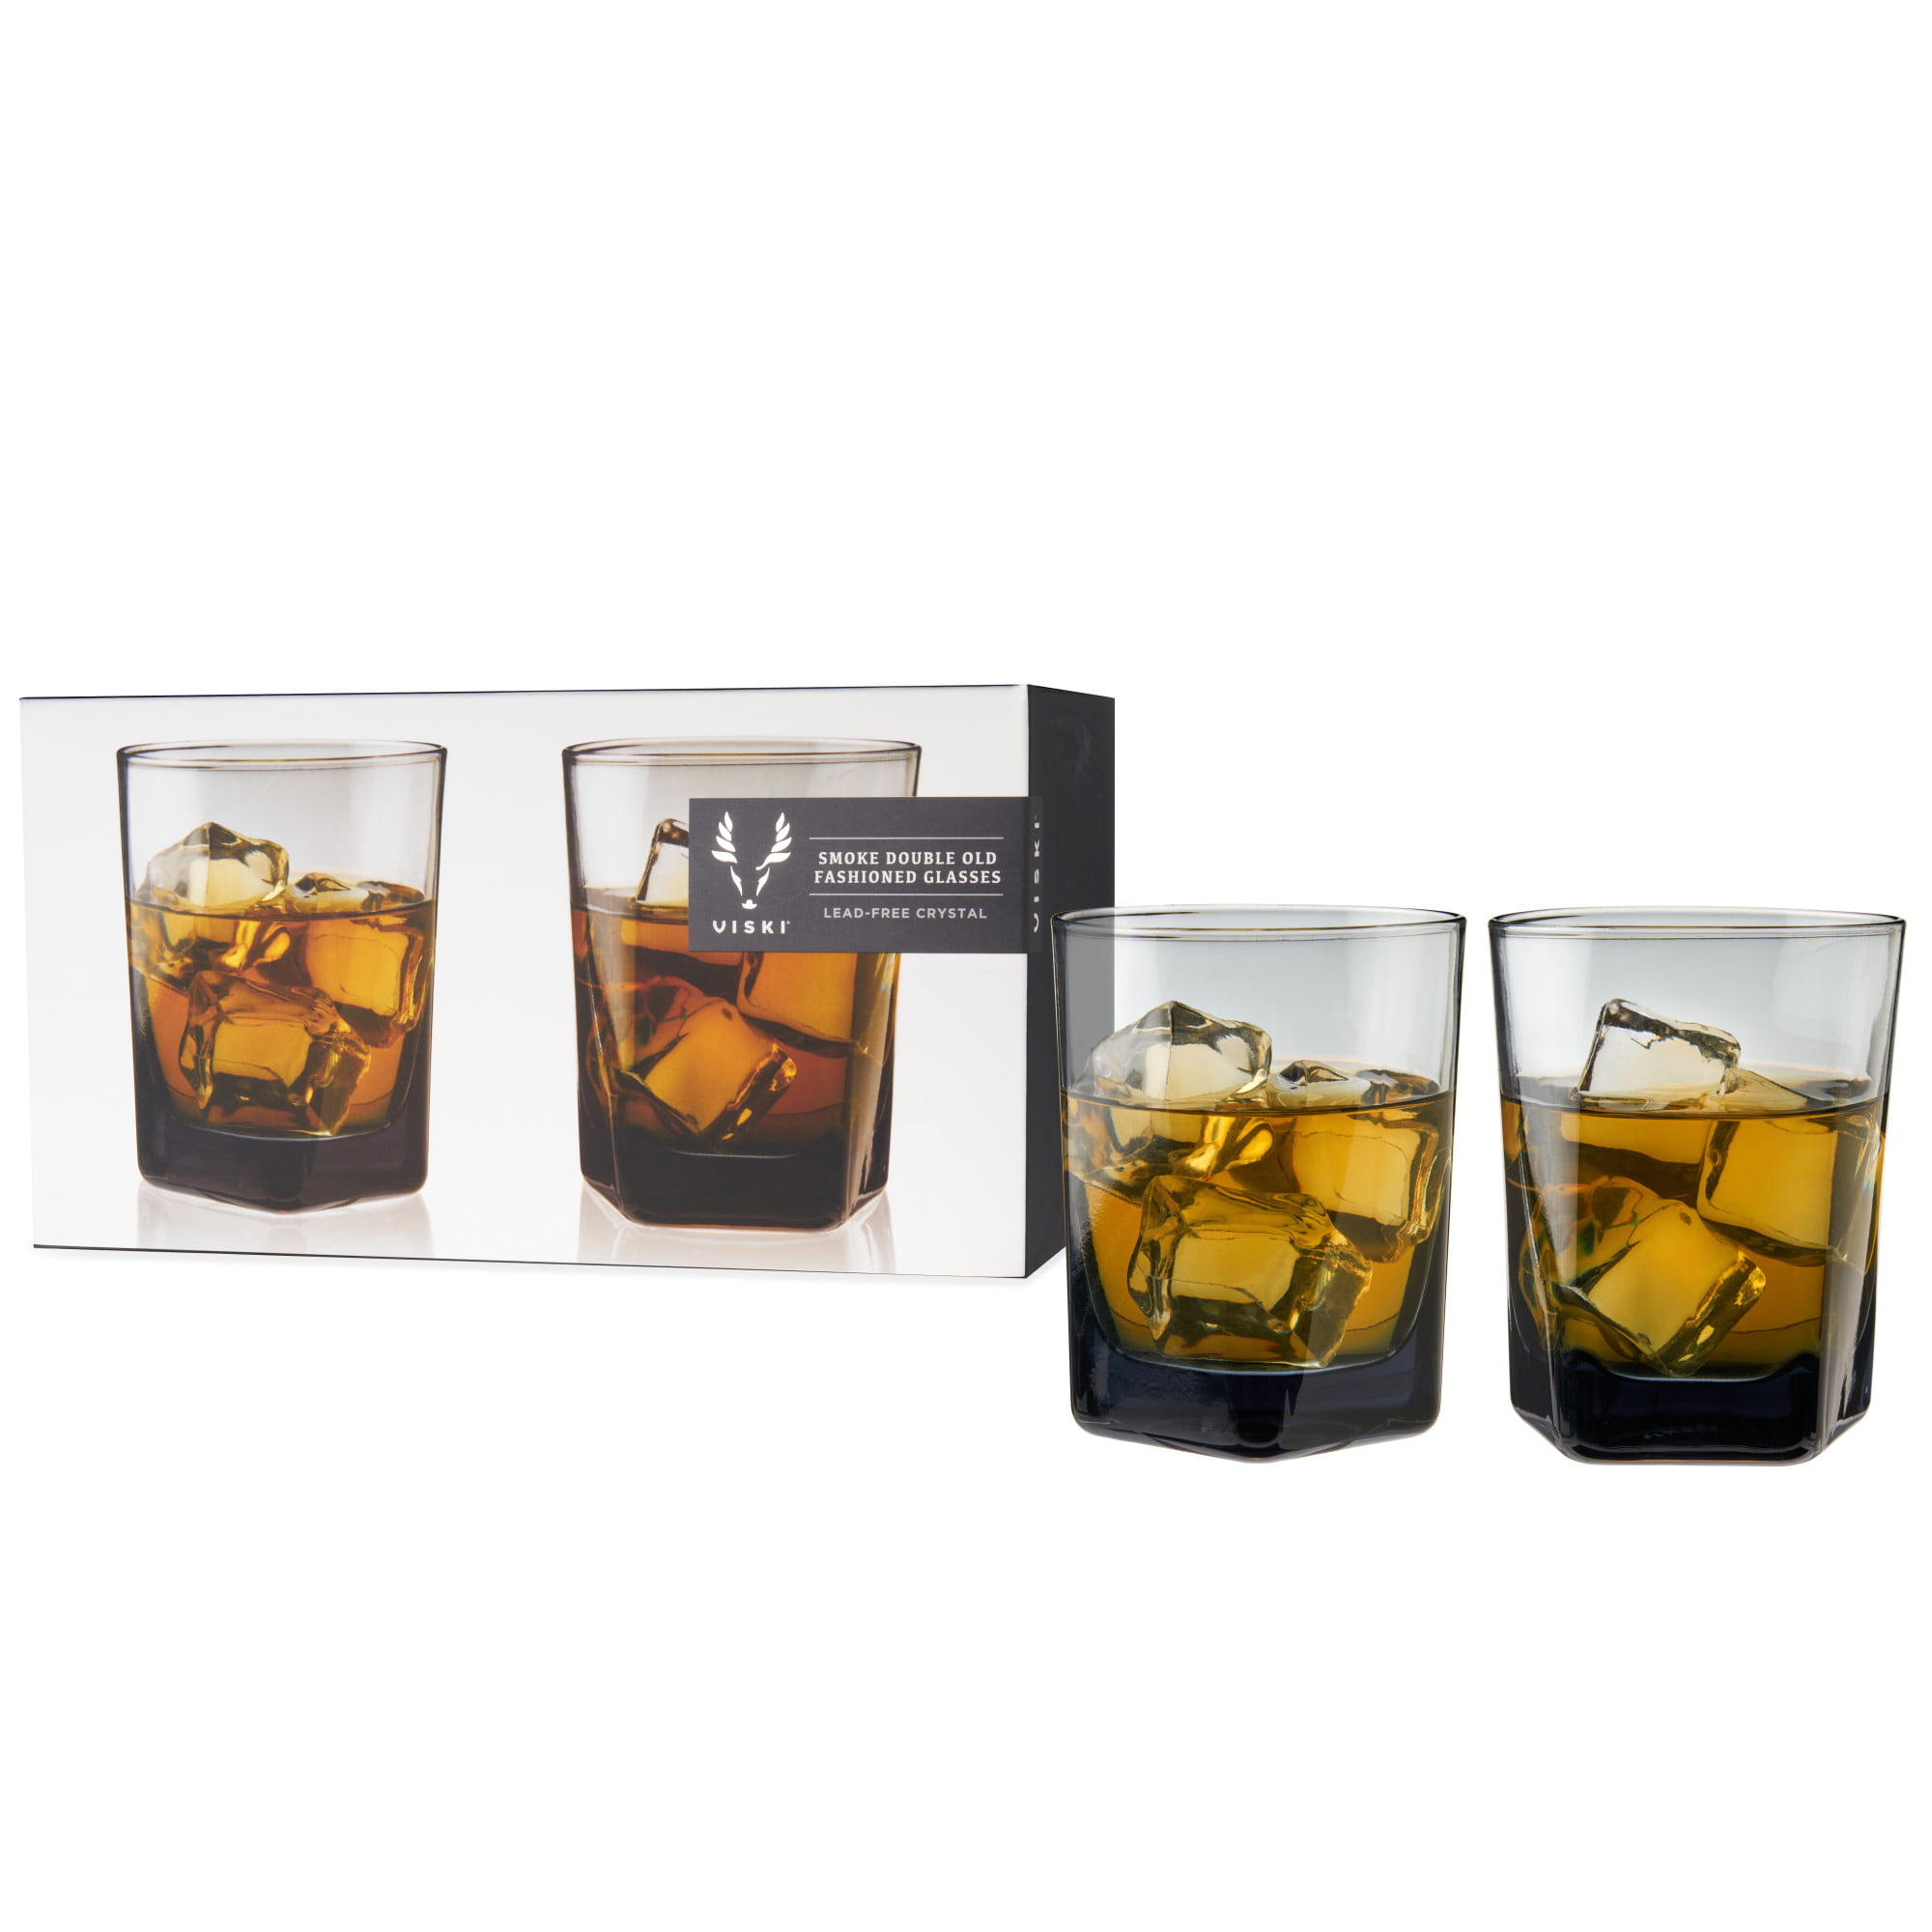 8 oz Cocktail Glass Gift Set Lead-Free Premium Crystal Glass Viski Crystal Negroni Tumblers Set of 2 Stylish Lowball Cocktail Glasses